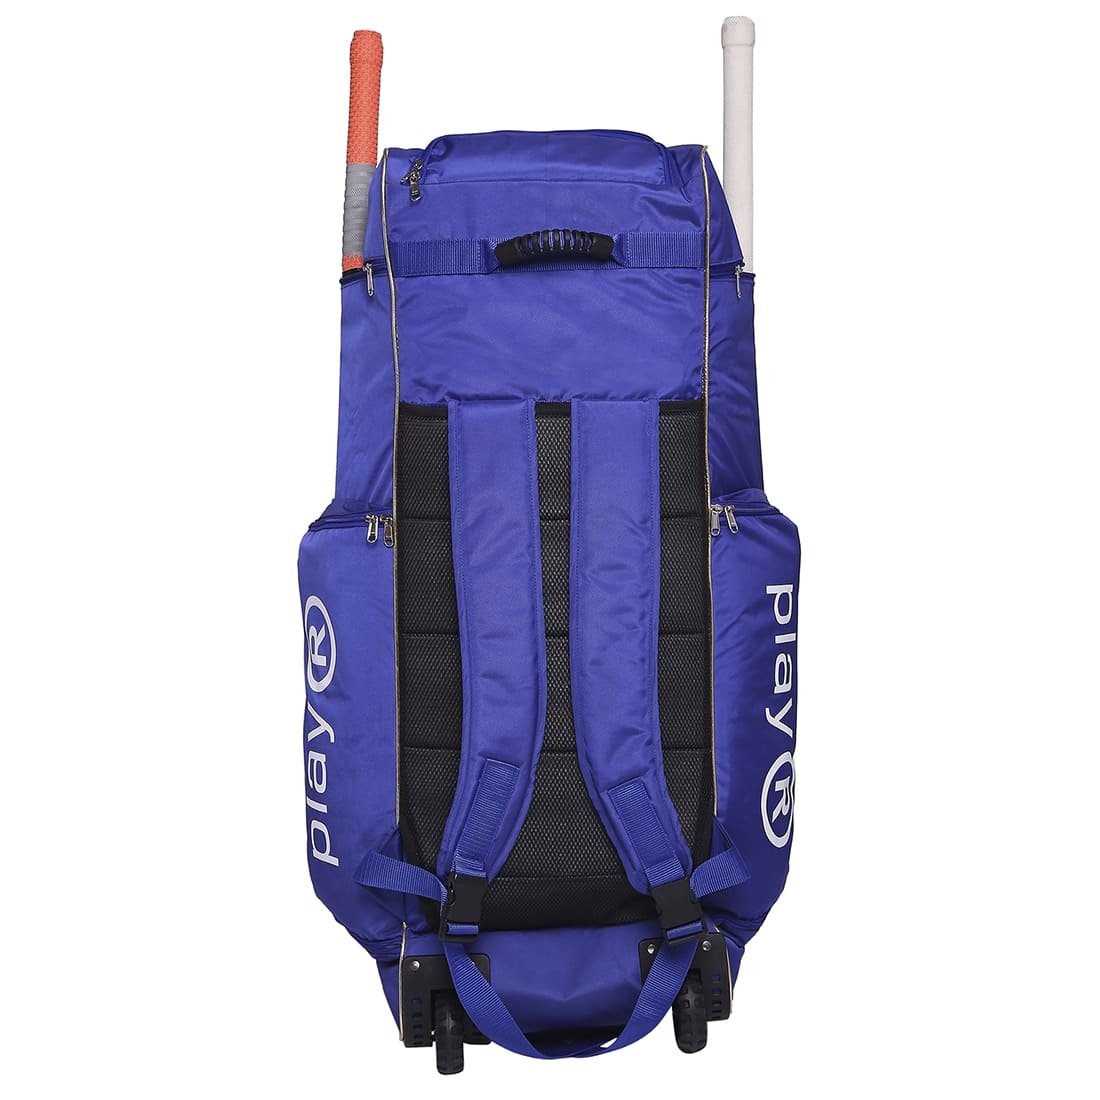 Cricket Kit Bag Wheelie Pro 250 By Kookaburra